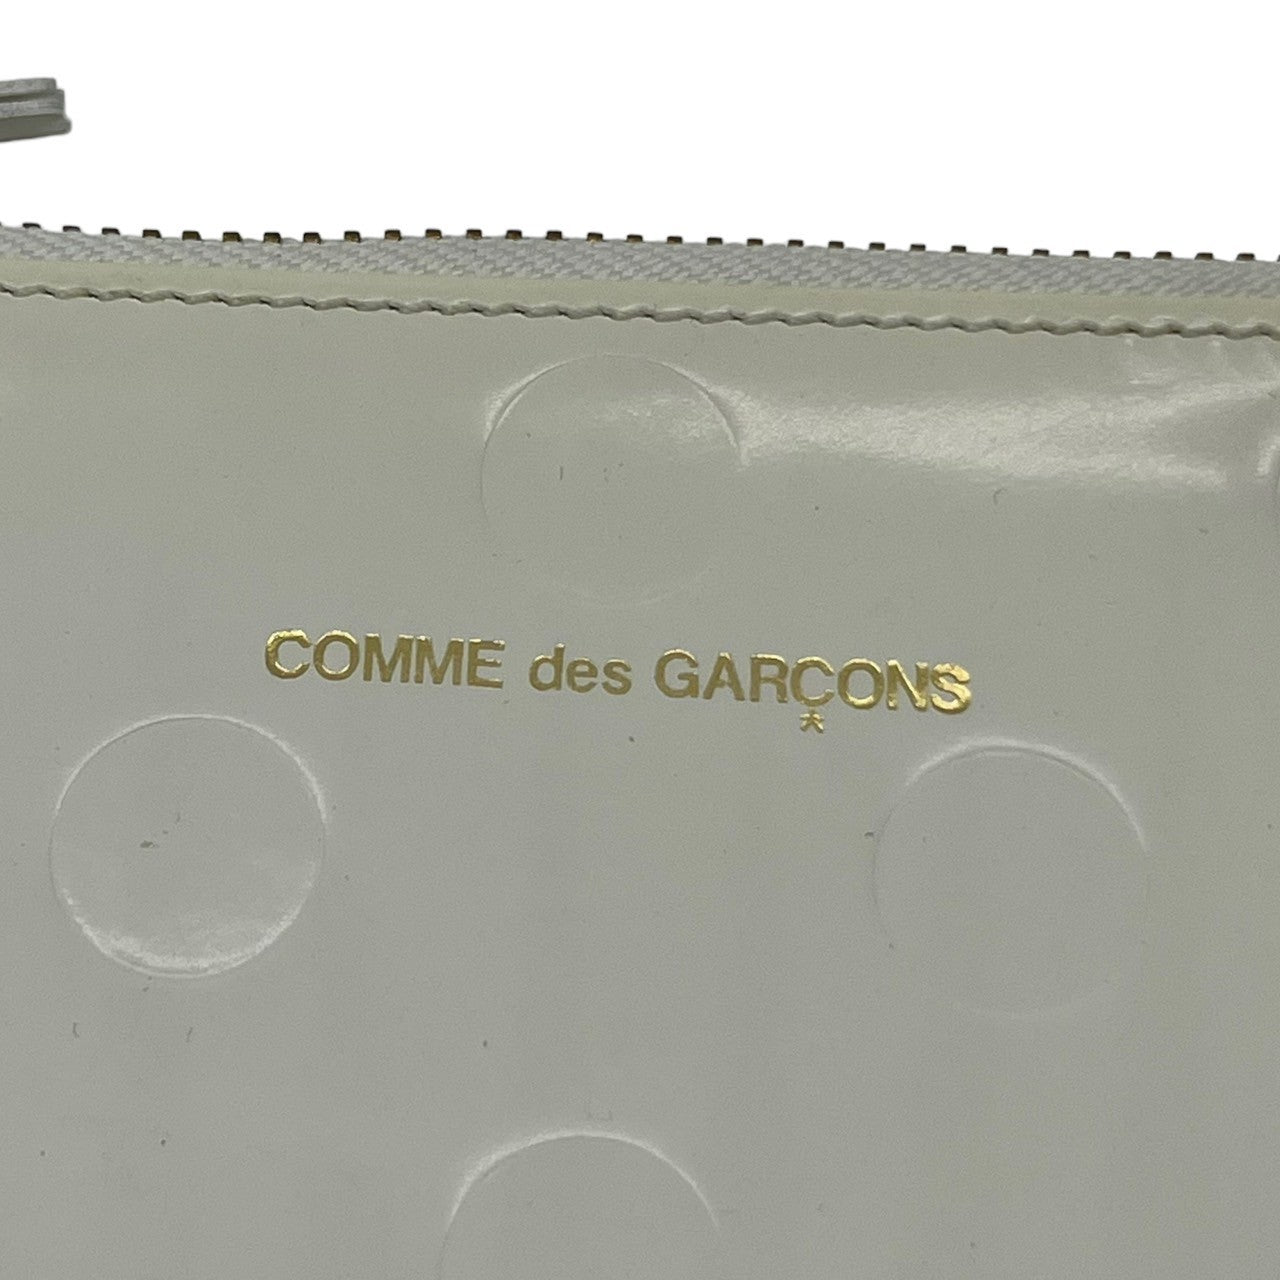 COMME des GARCONS(コムデギャルソン) テキストロゴ同色ドットポーチ オフホワイト 内側ハガレあり